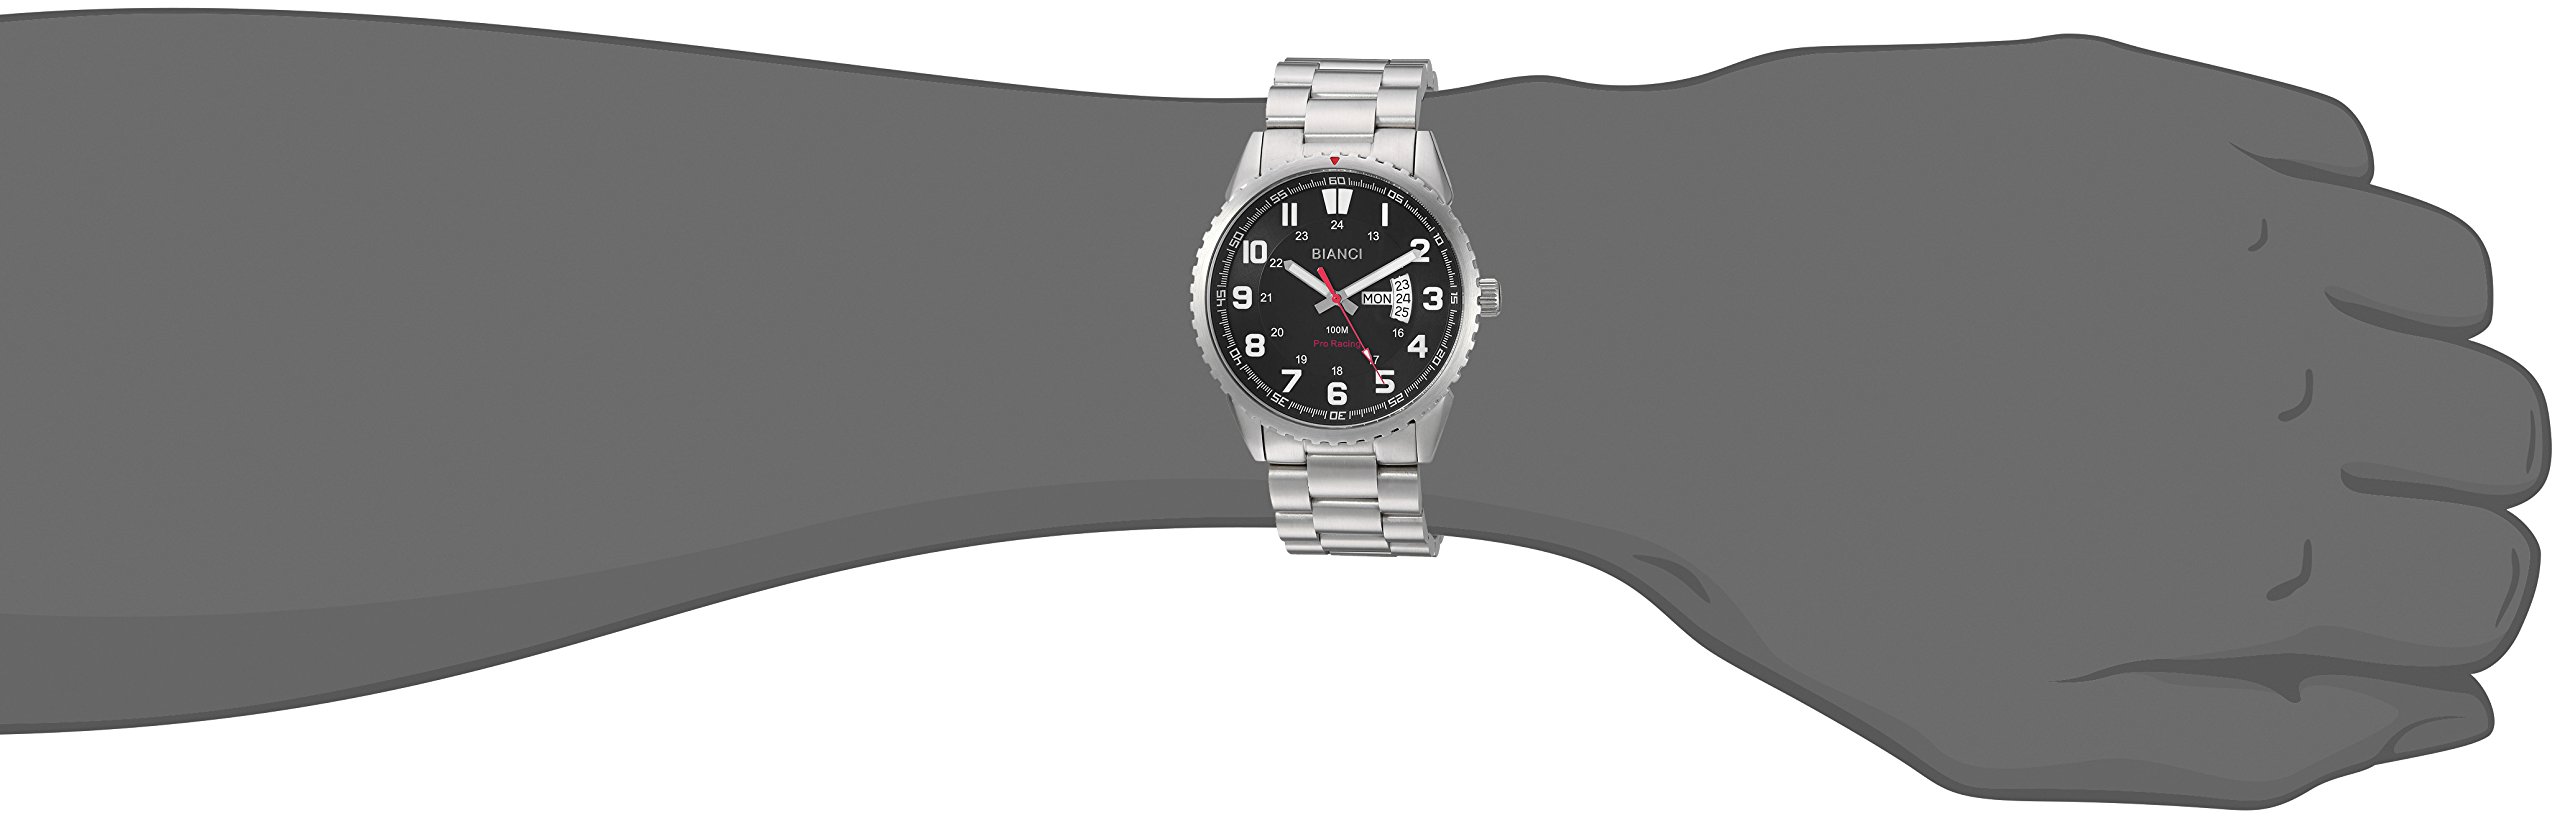 ROBERTO BIANCI WATCHES Men's RB70995 Ricci Analog Display Quartz Silver Watch